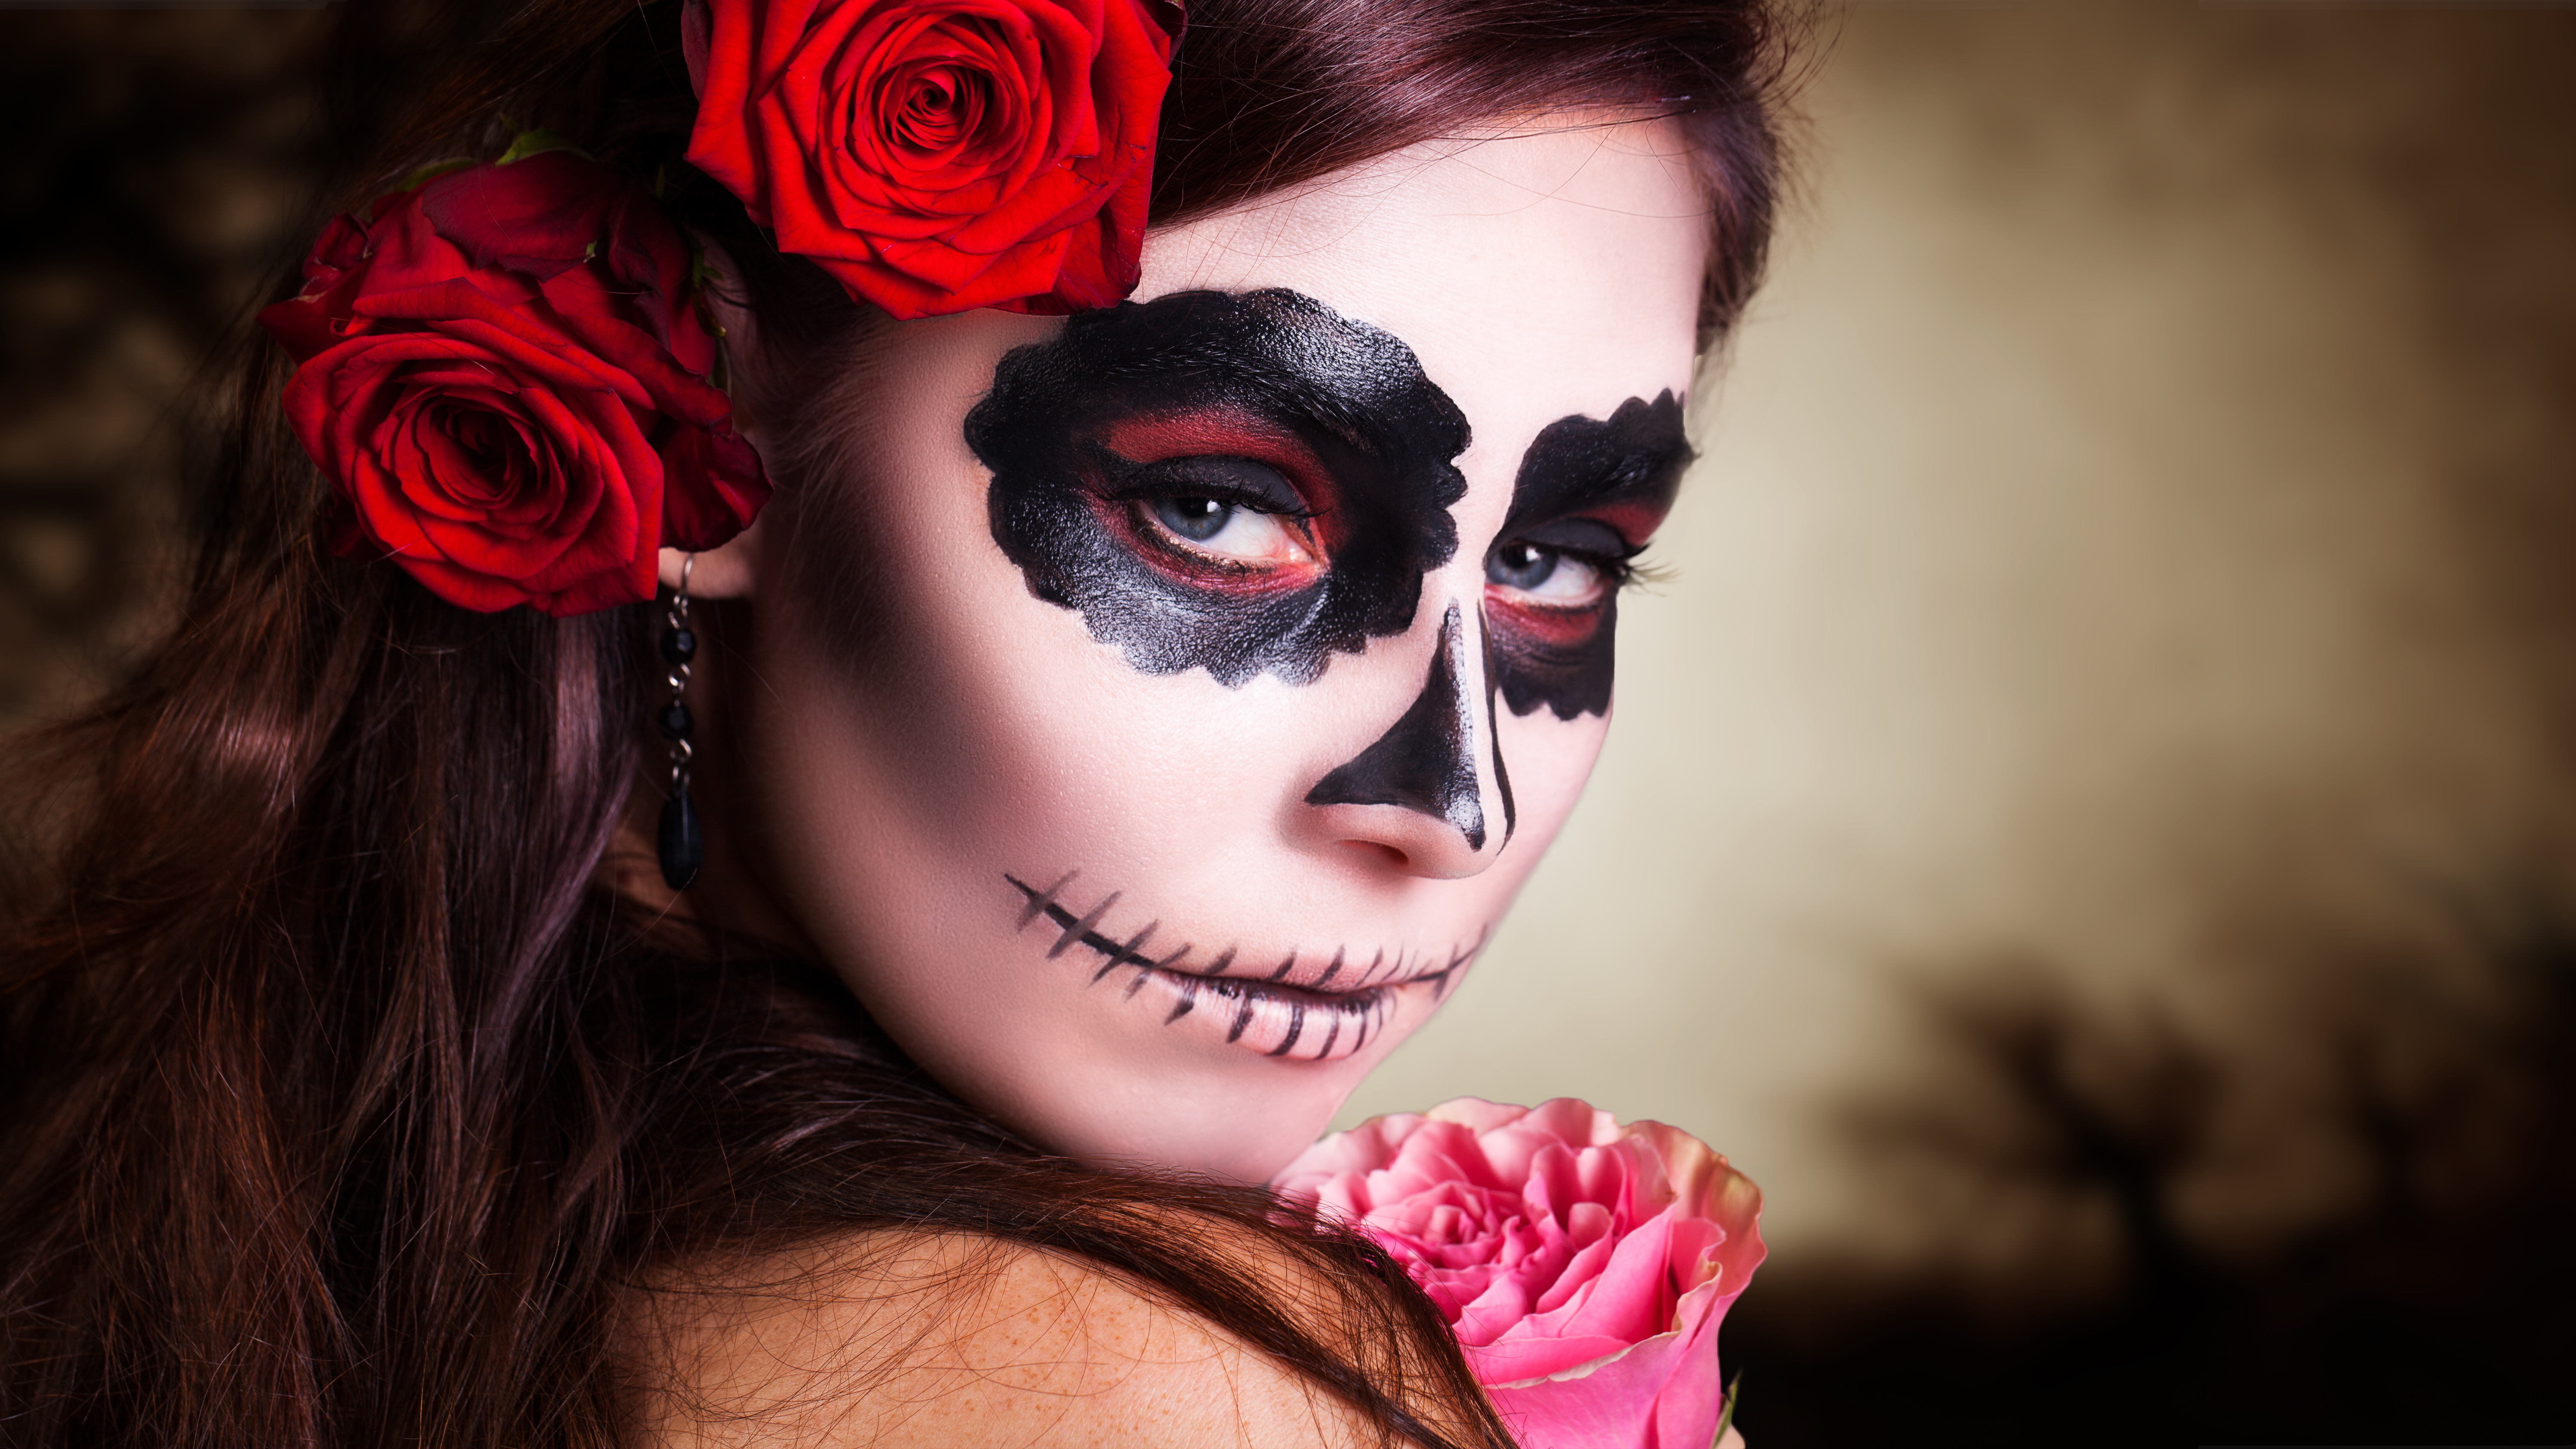 artistic, sugar skull, blue eyes, brunette, day of the dead, face, flower, makeup, red rose, rose